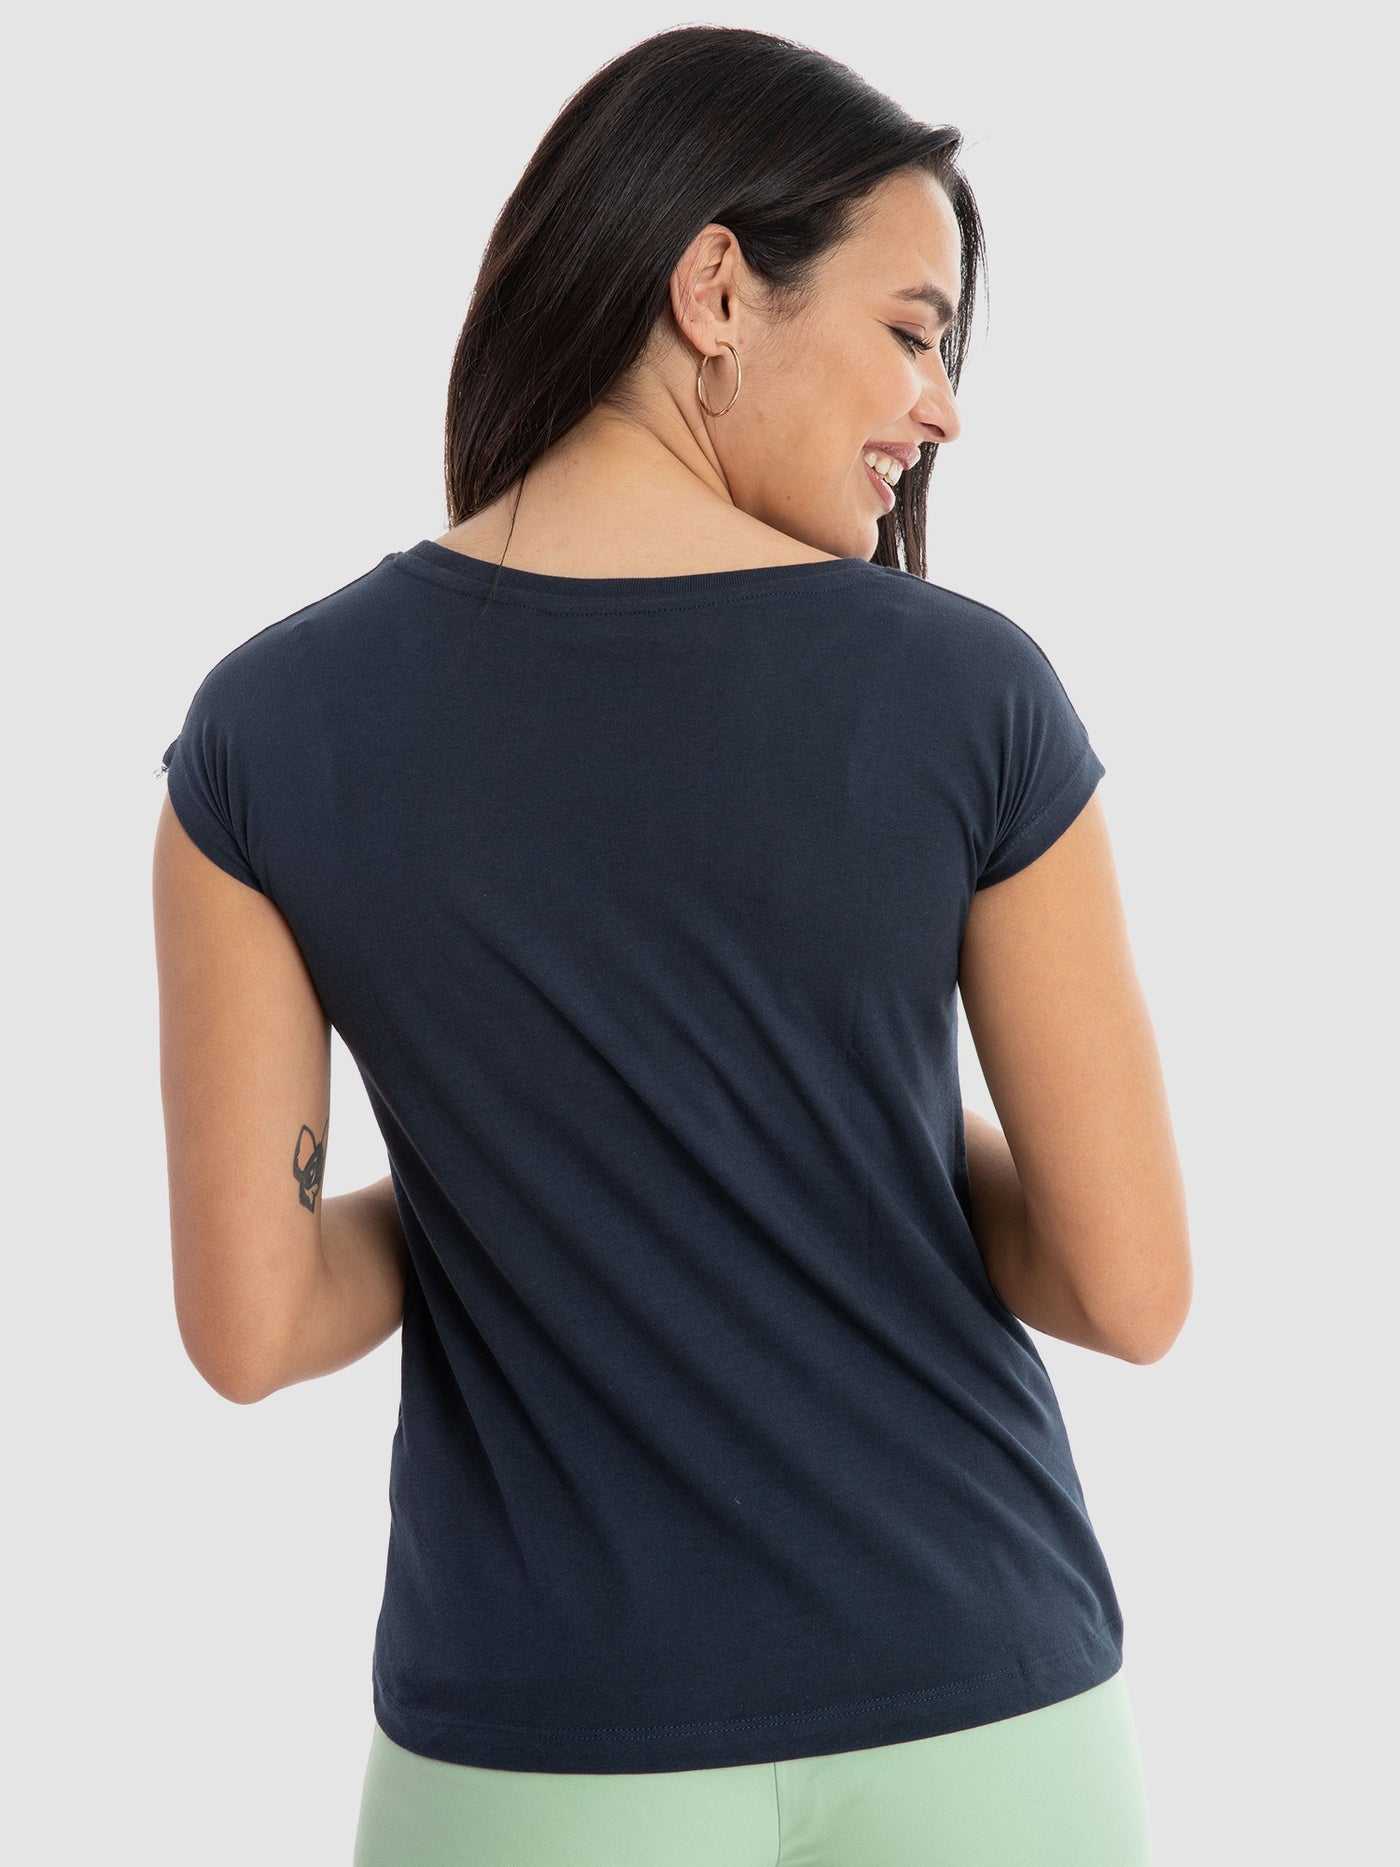 Premoda Womens Cap Sleeves T-Shirt